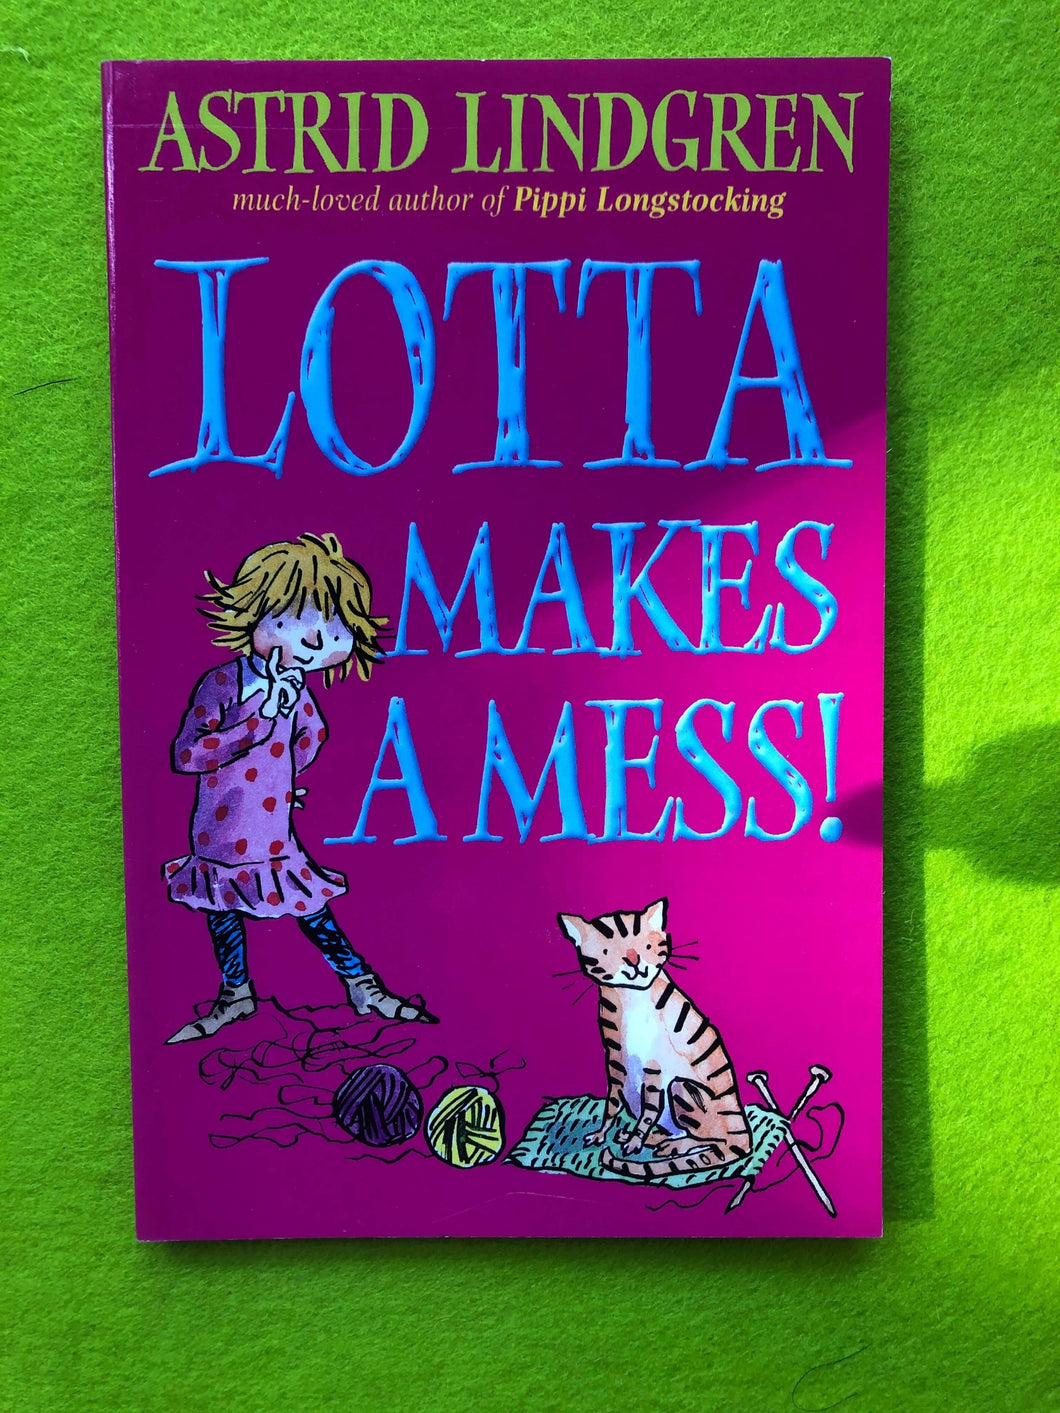 Astrid Lindgren - Lotta Makes a Mess